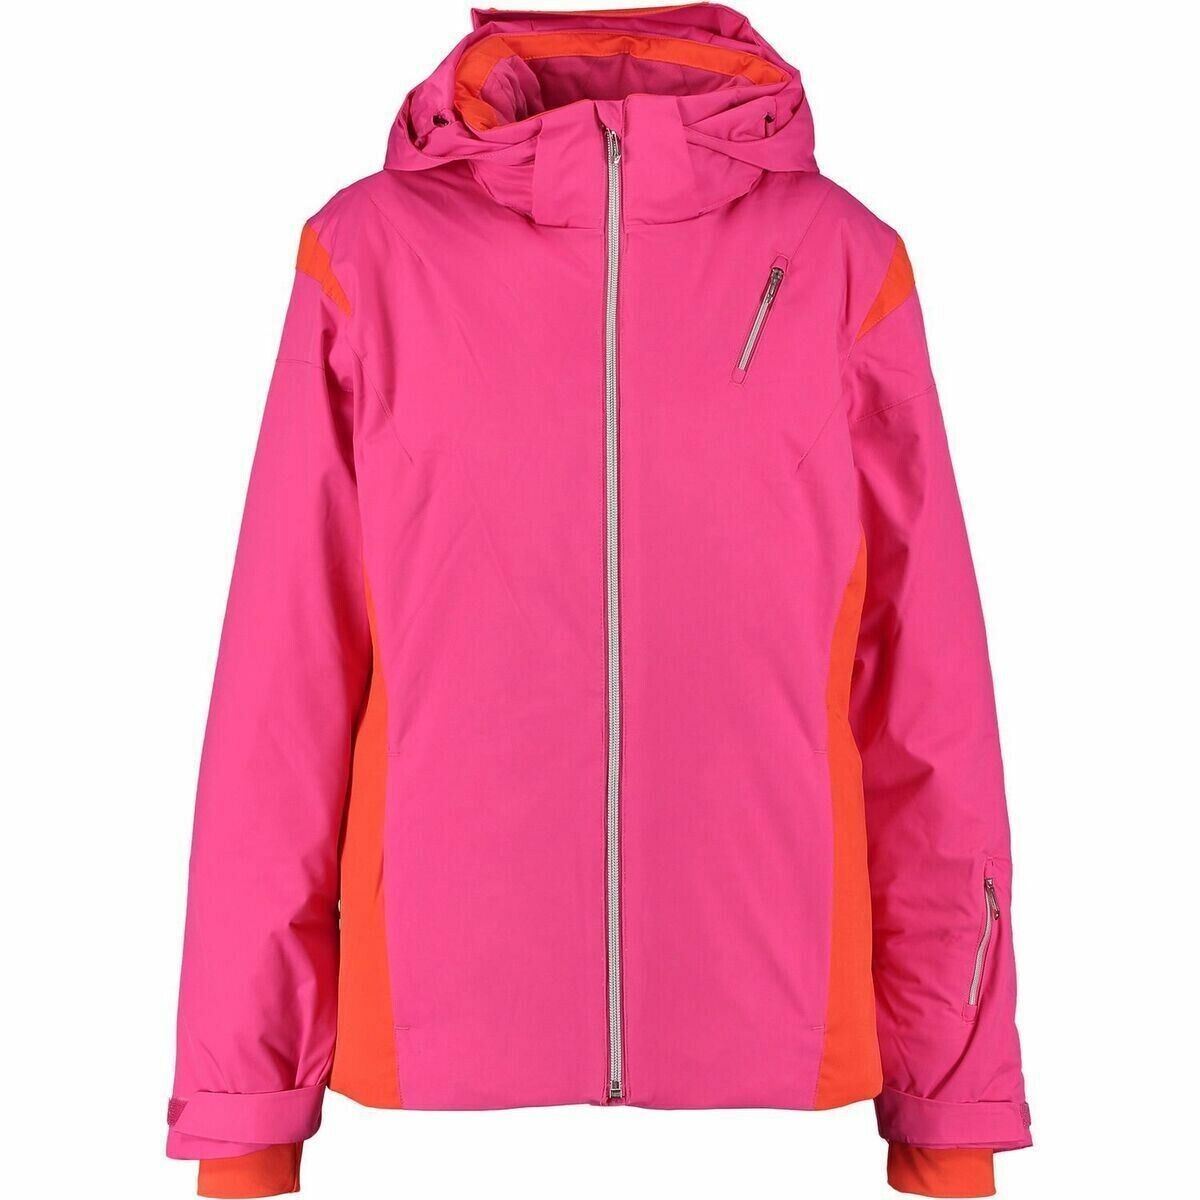 SPYDER Womens PREVAIL Ski Jacket, Pink/Orange, size UK 6